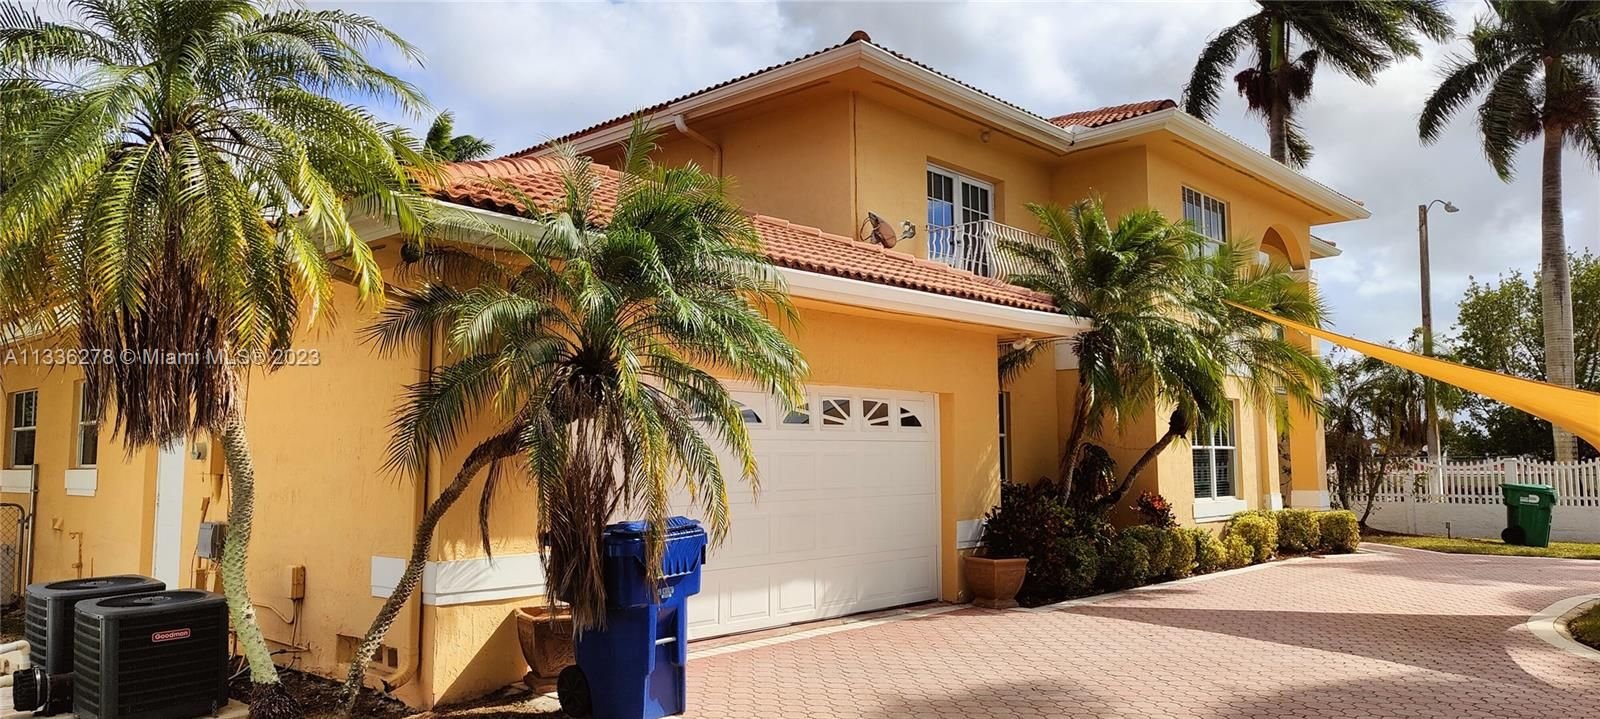 Real estate property located at 4691 158th Ct, Miami-Dade County, Miami, FL